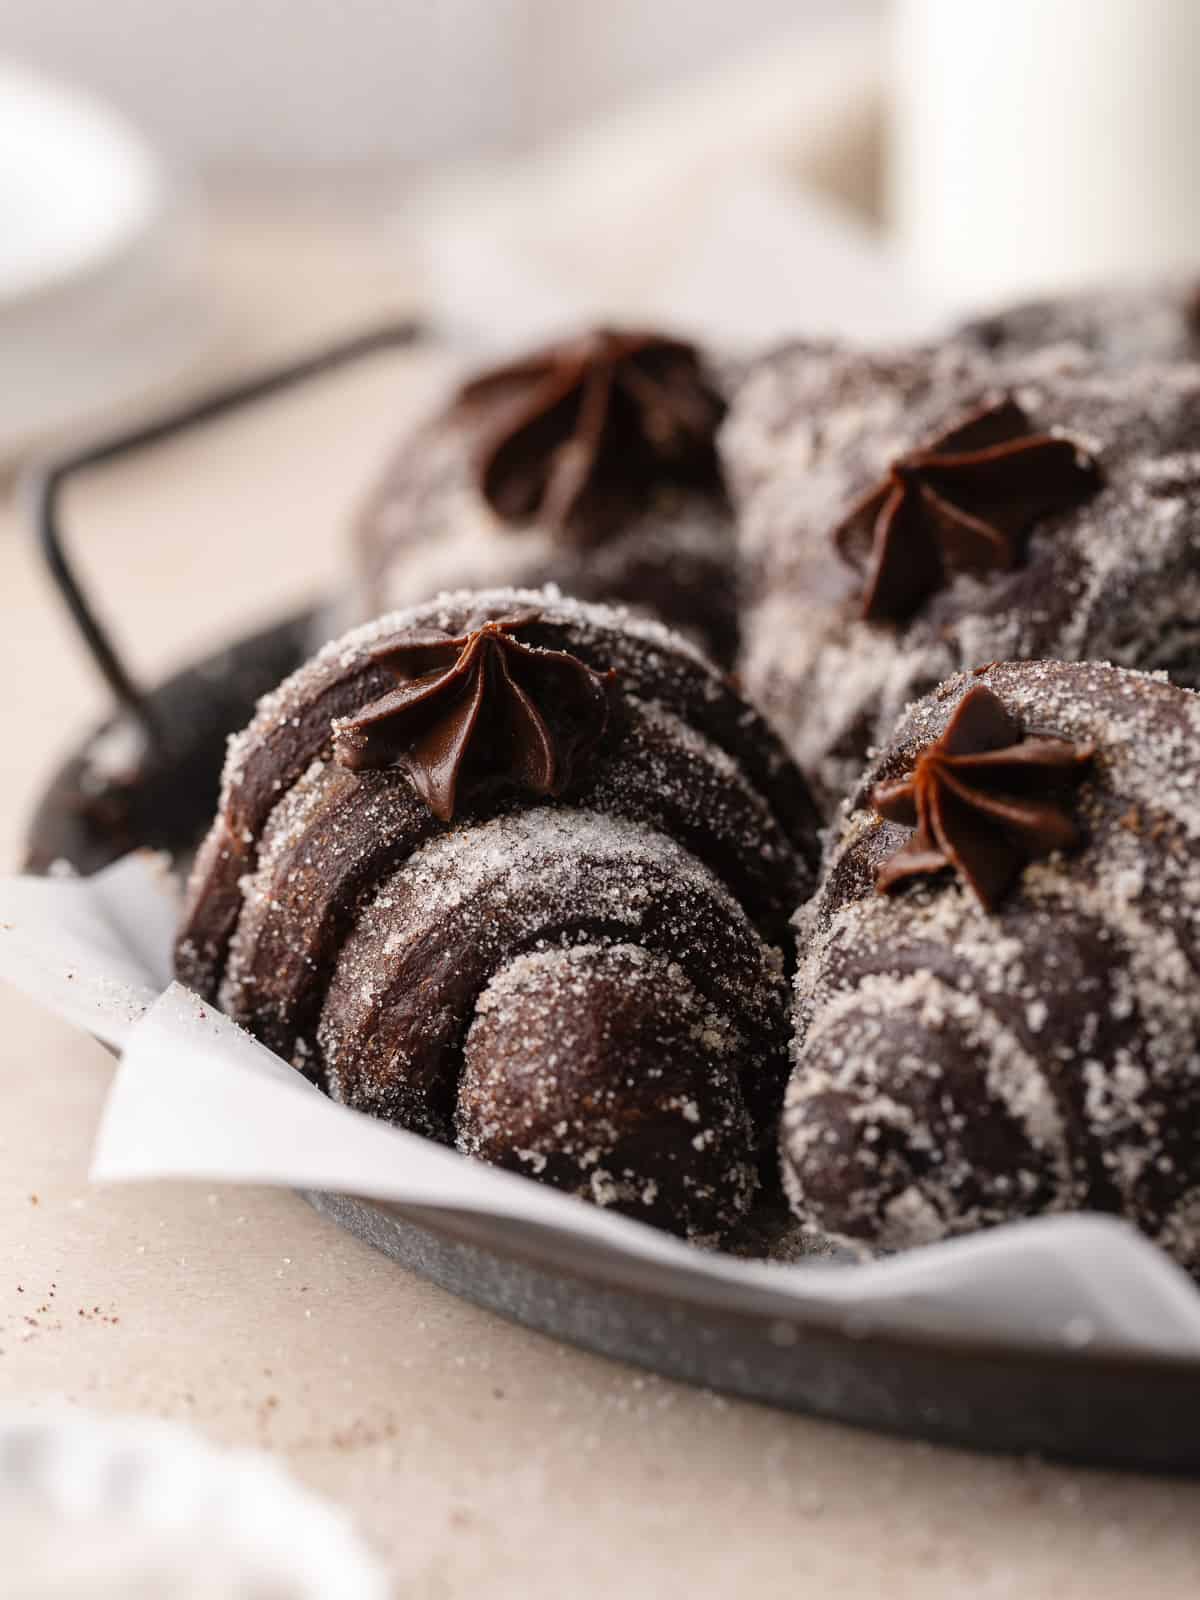 A tray of chocolate brioche donuts